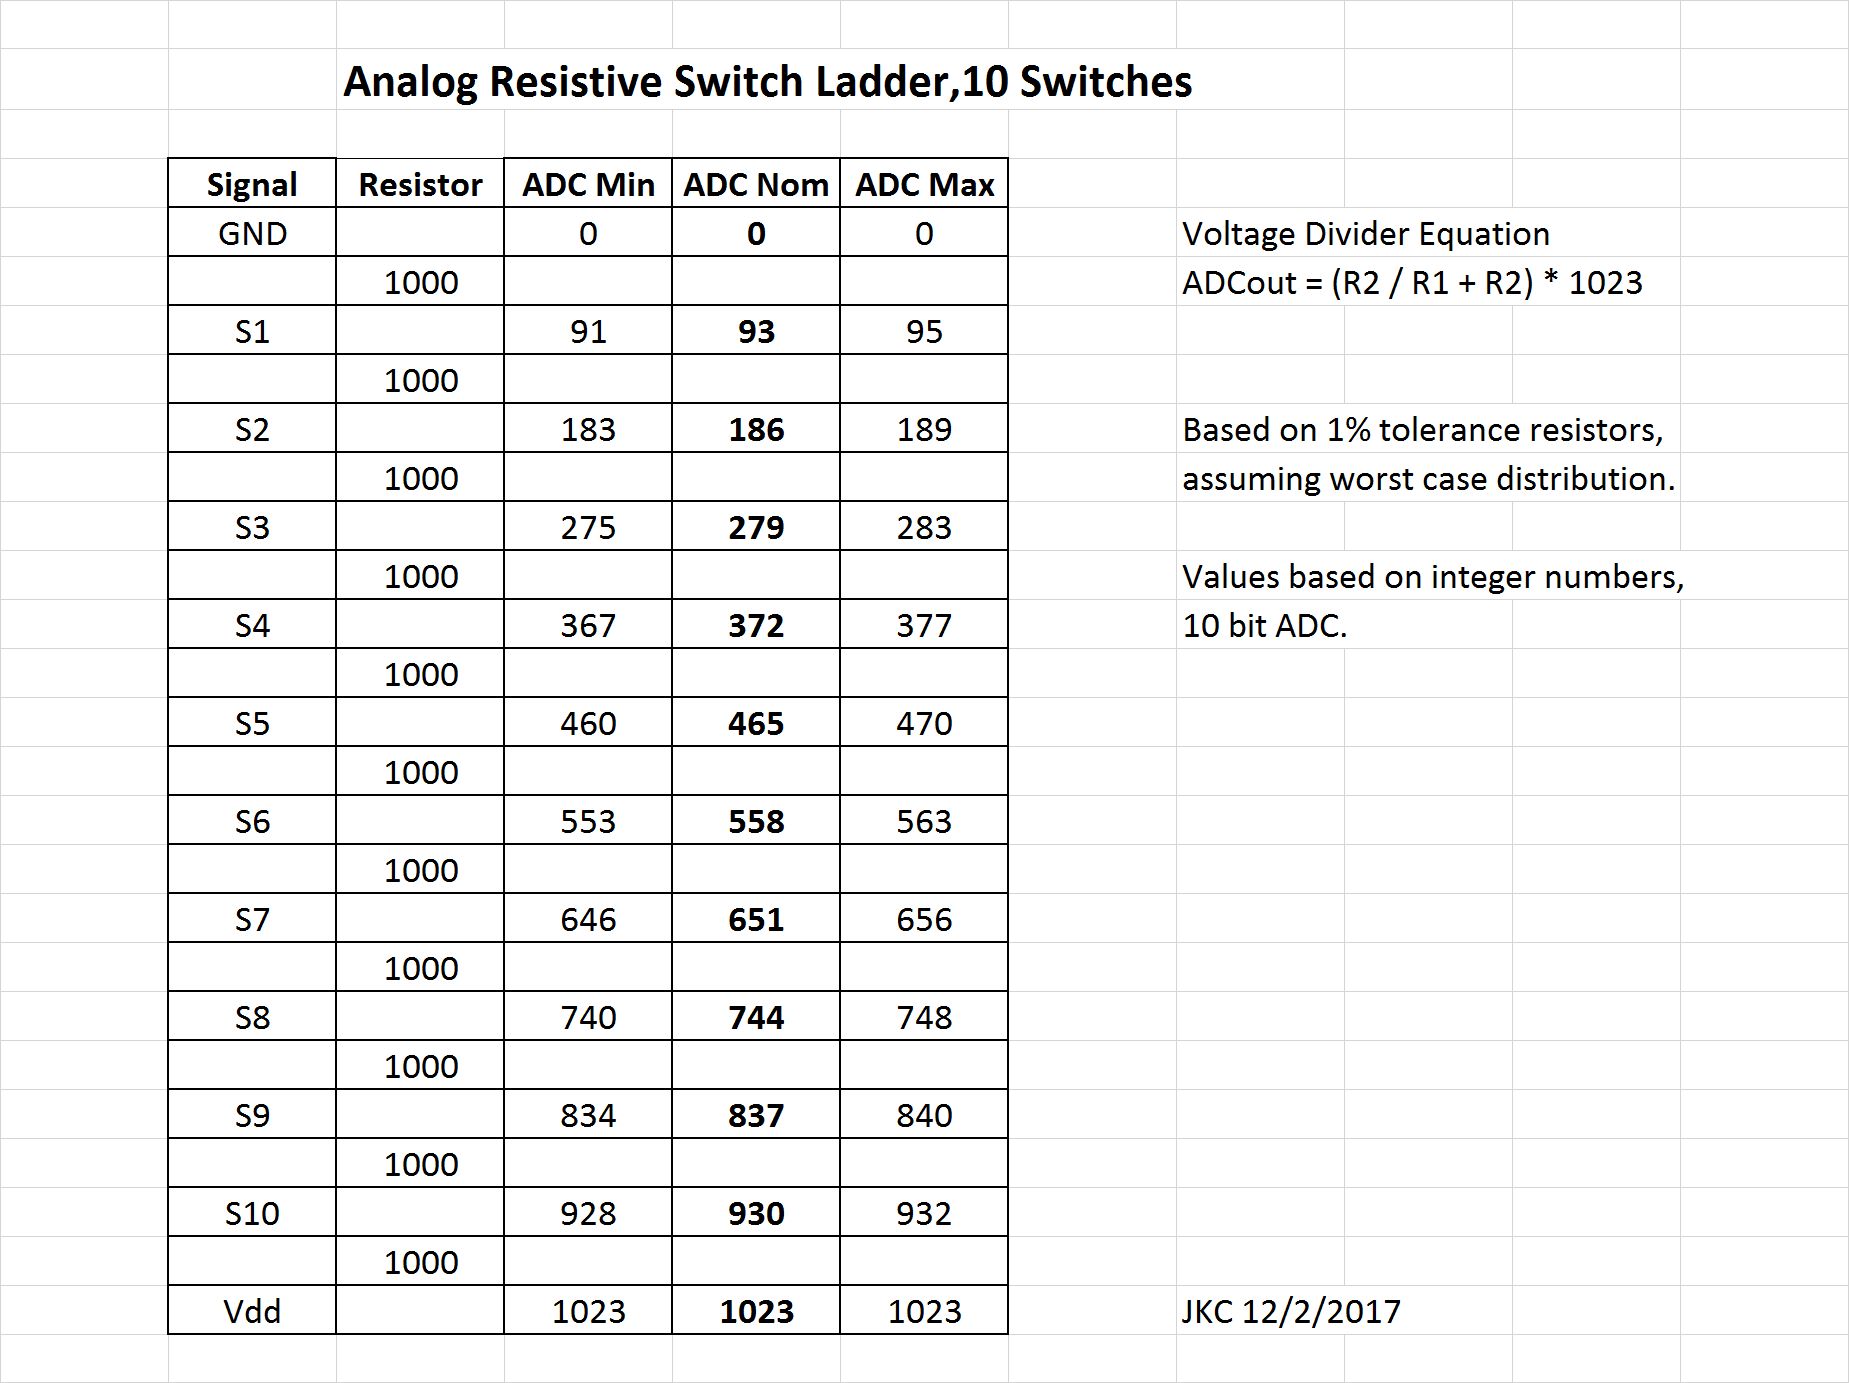 Analog Switch Resister Ladder.jpg